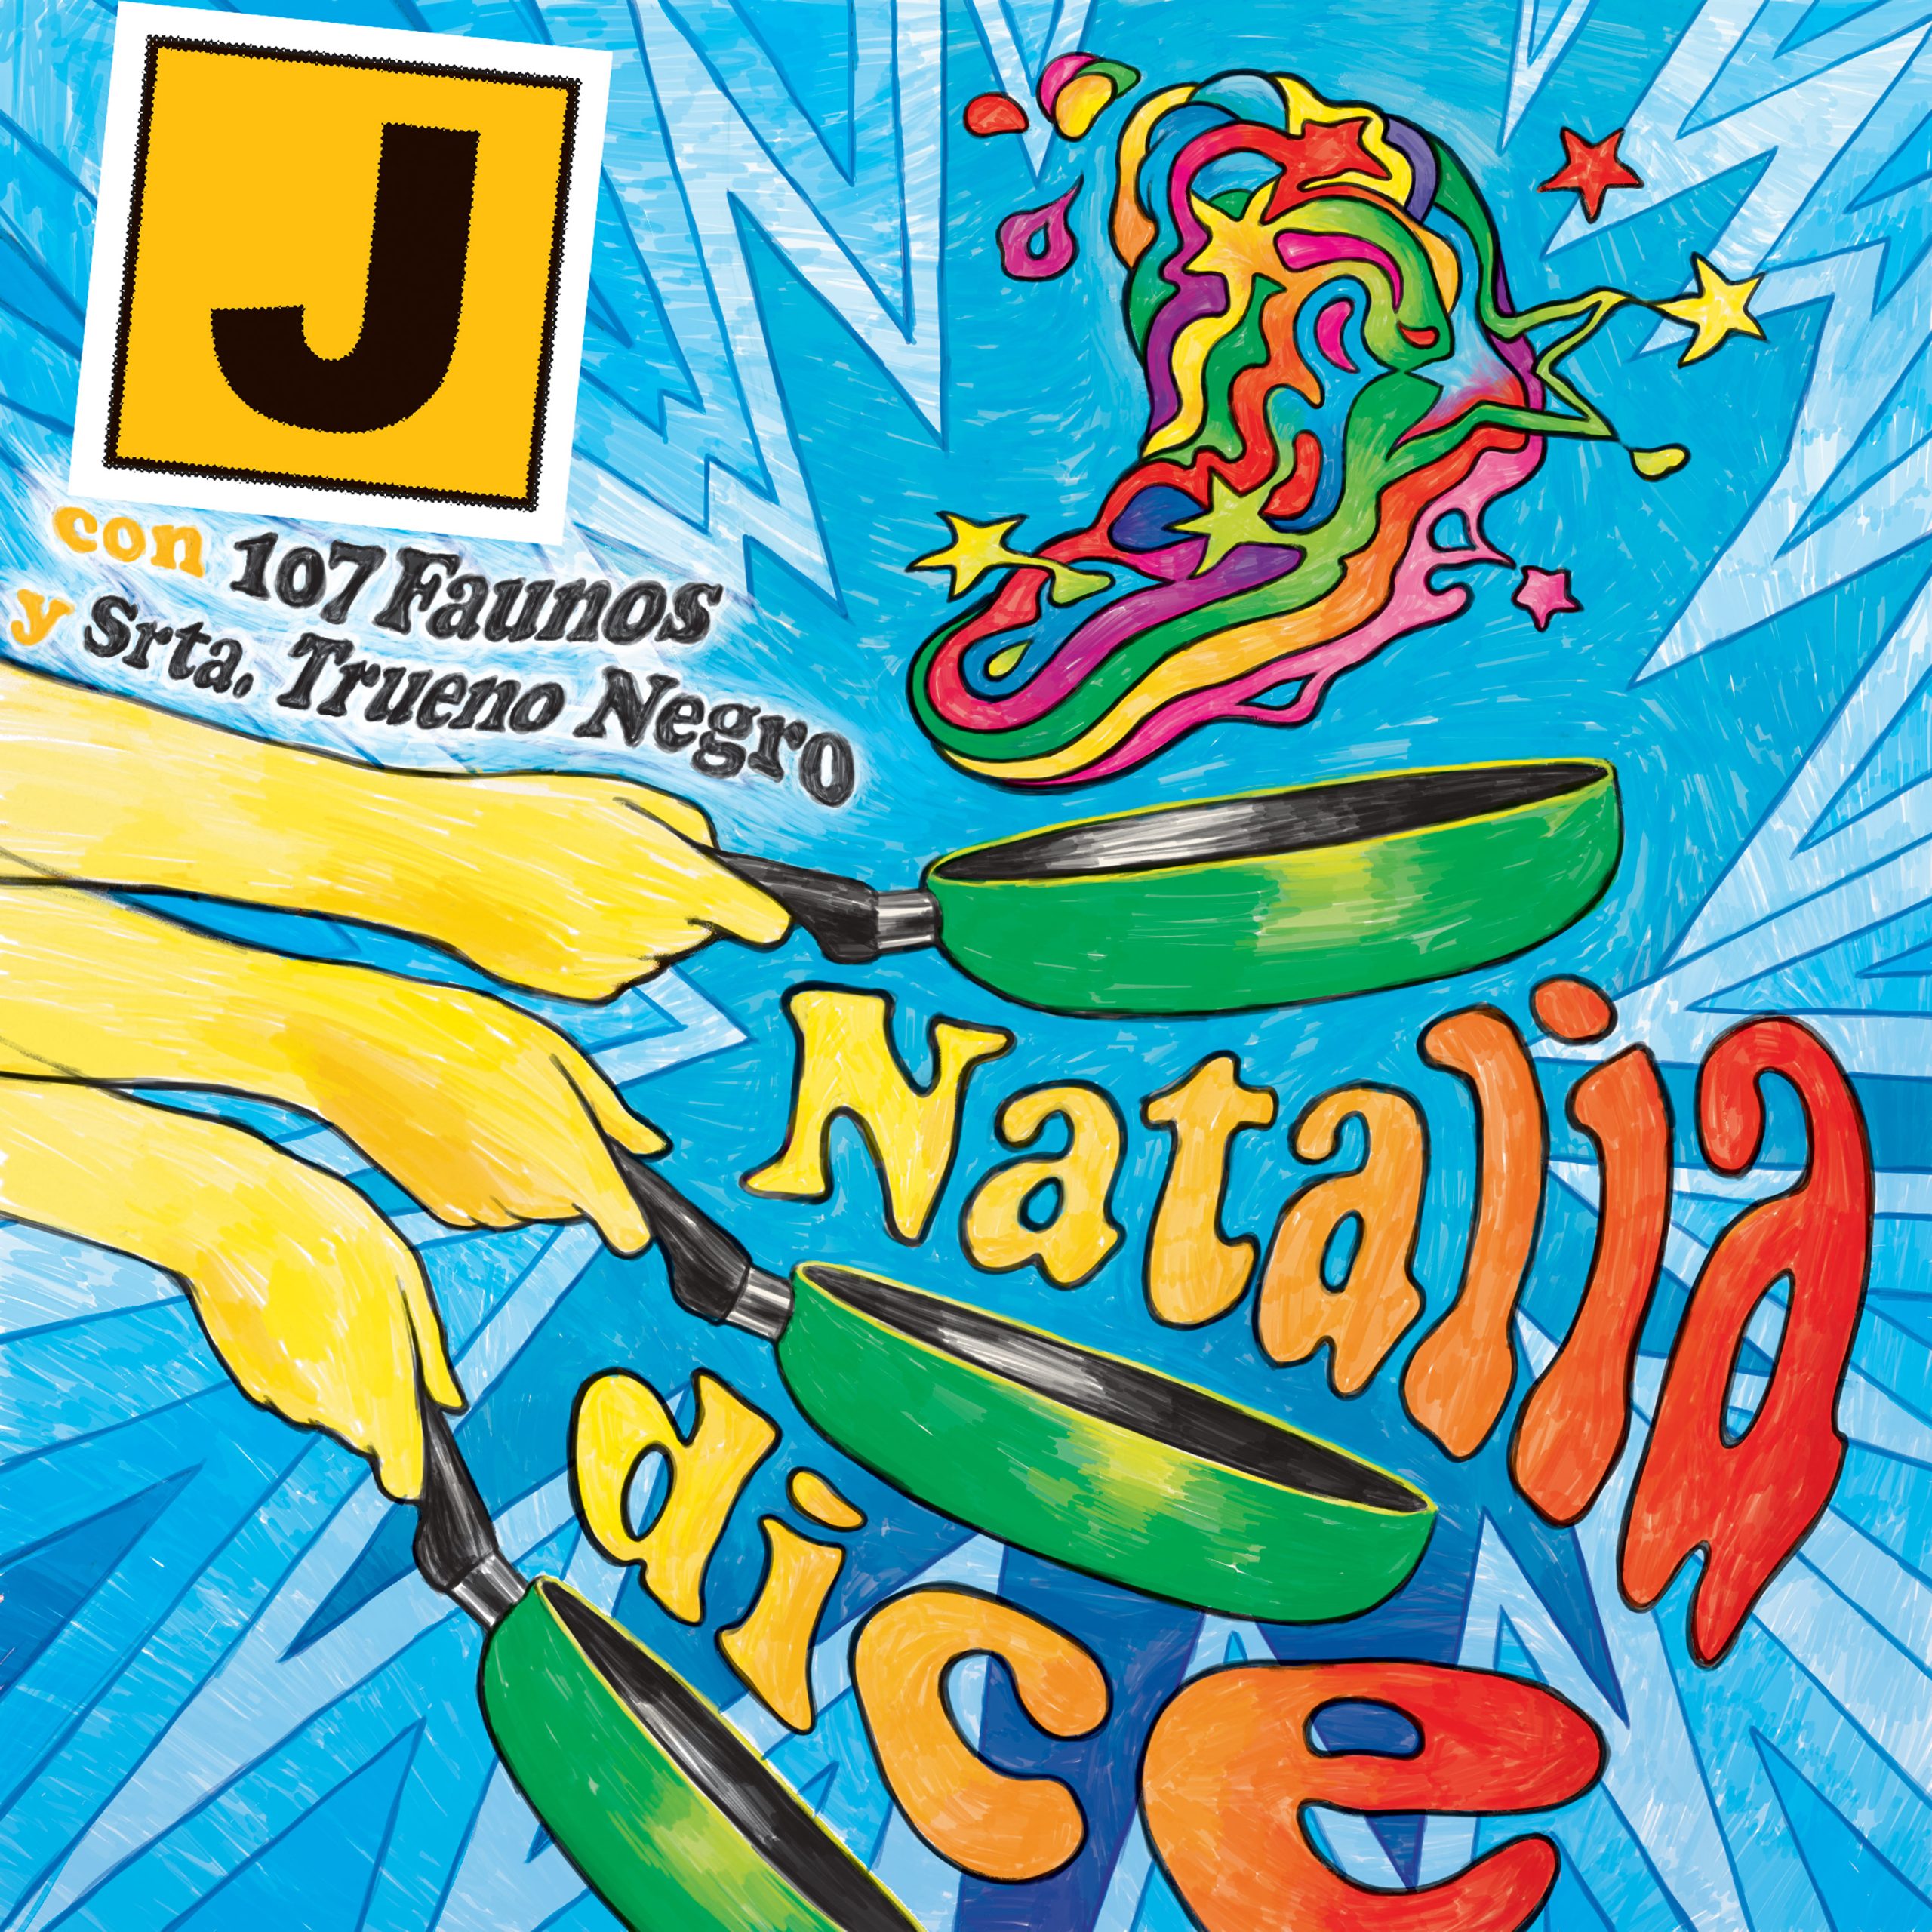 J "Natalia Dice/Arrebato" 7"